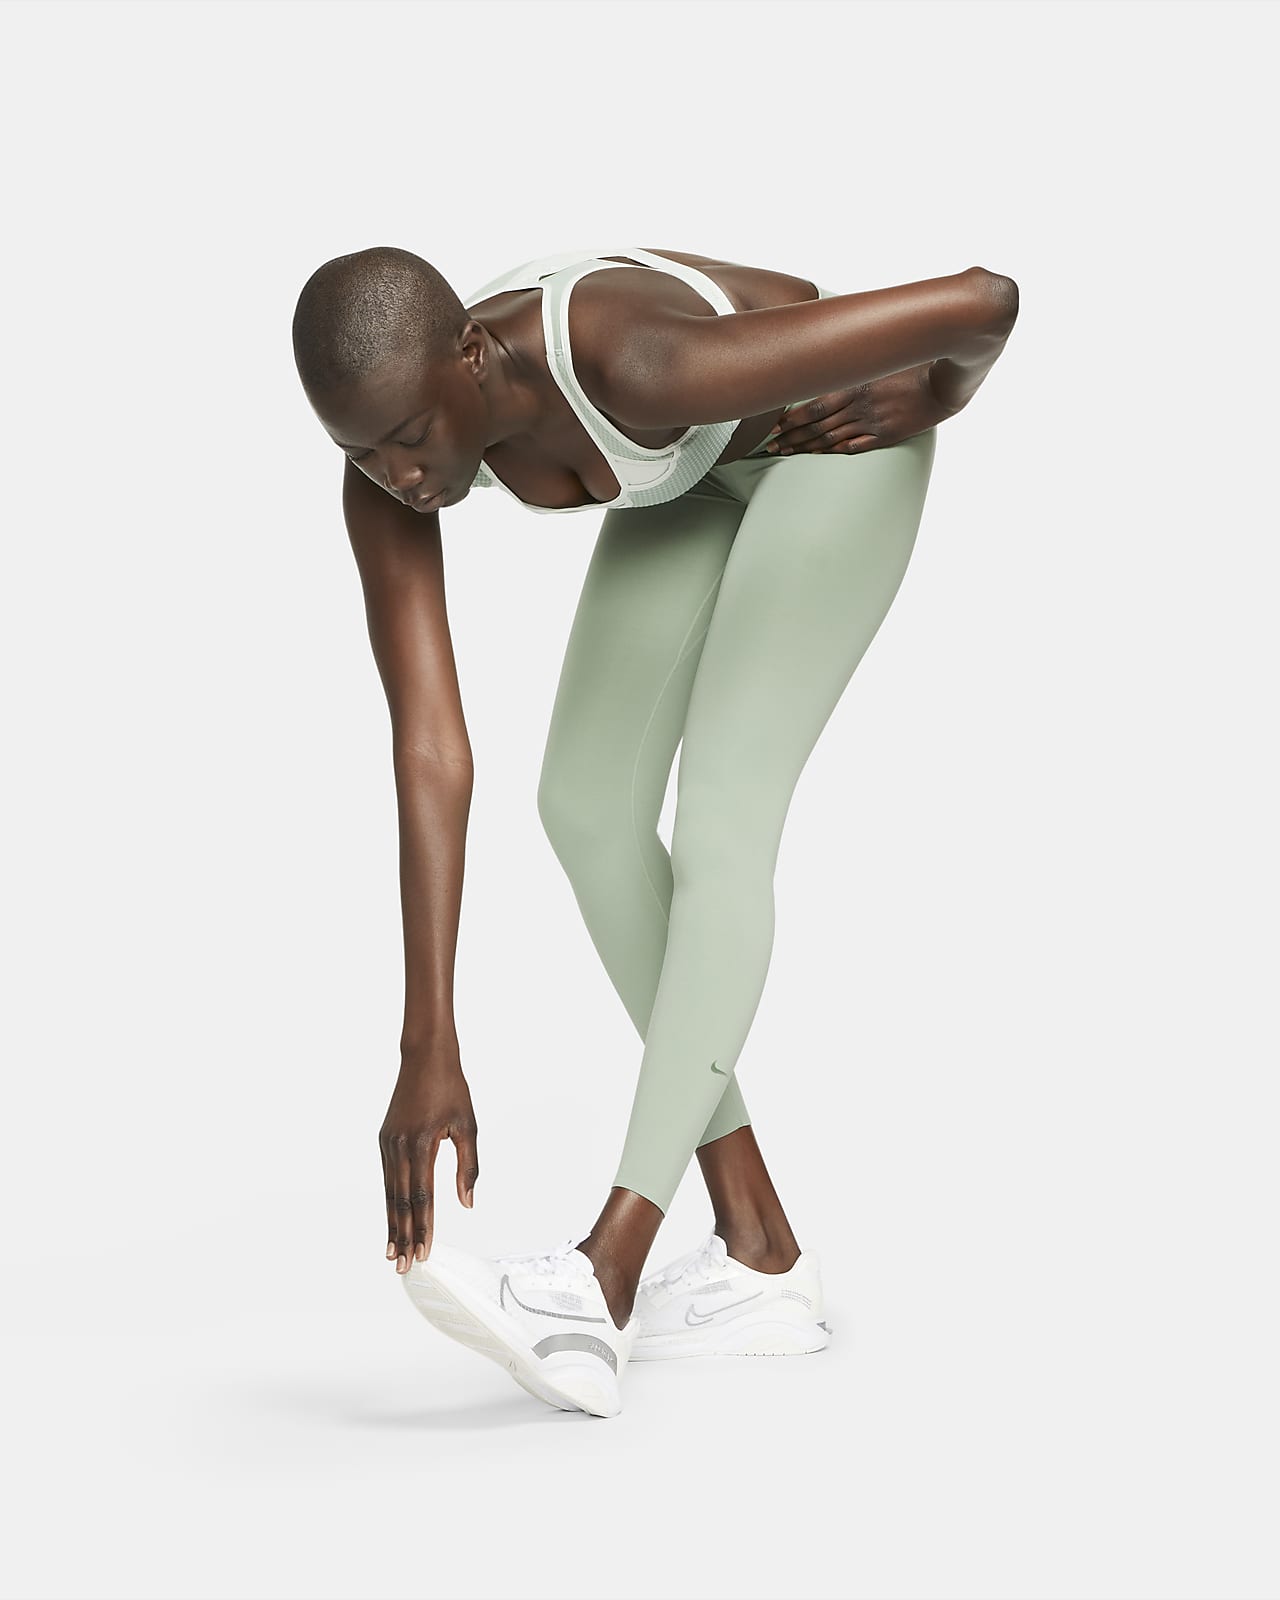 Nike One Luxe Women's Mid-Rise Leggings